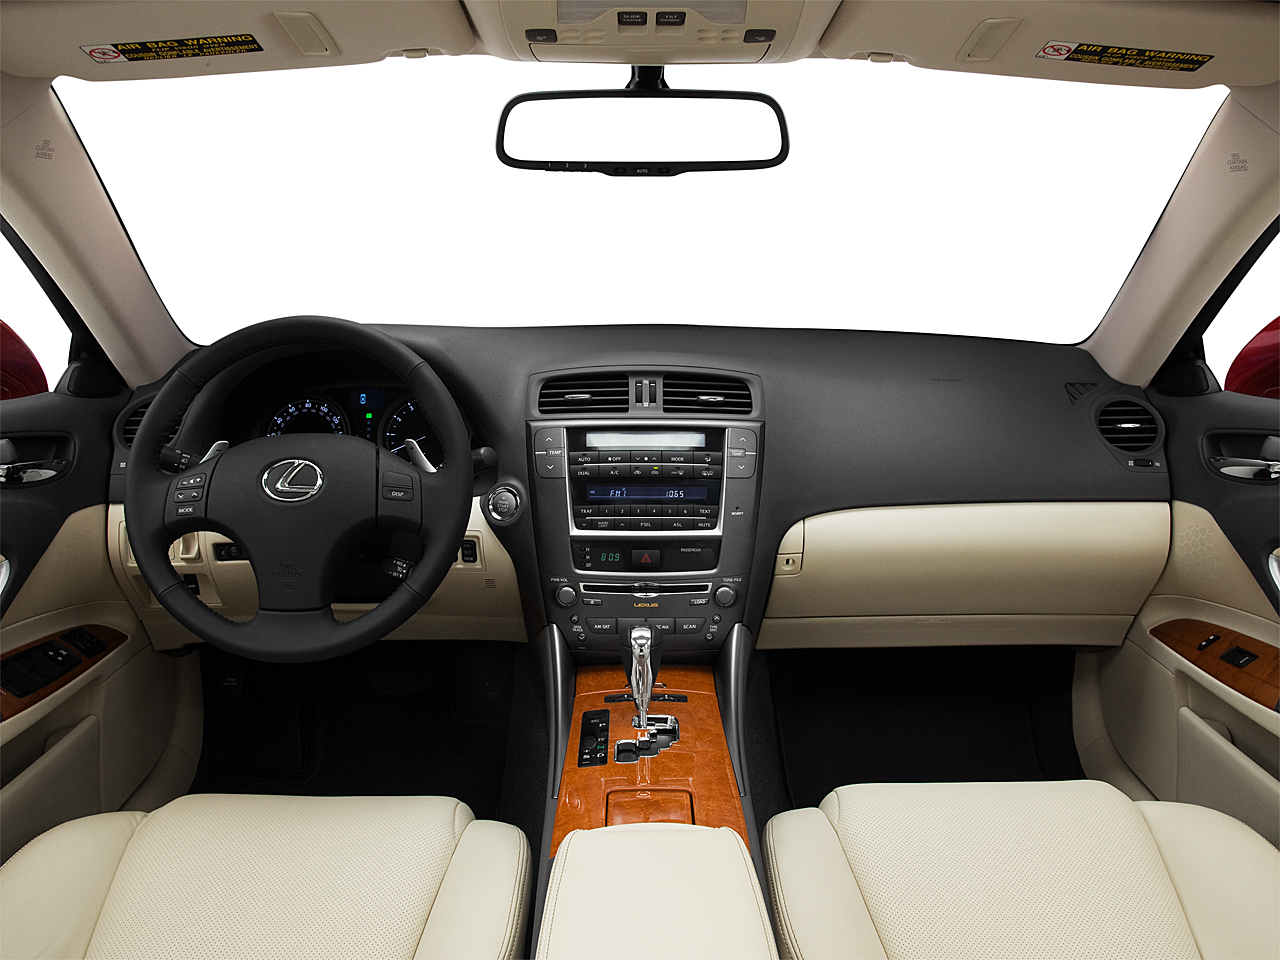 2009 Lexus IS 250 AWD 4dr Sedan - Research - GrooveCar